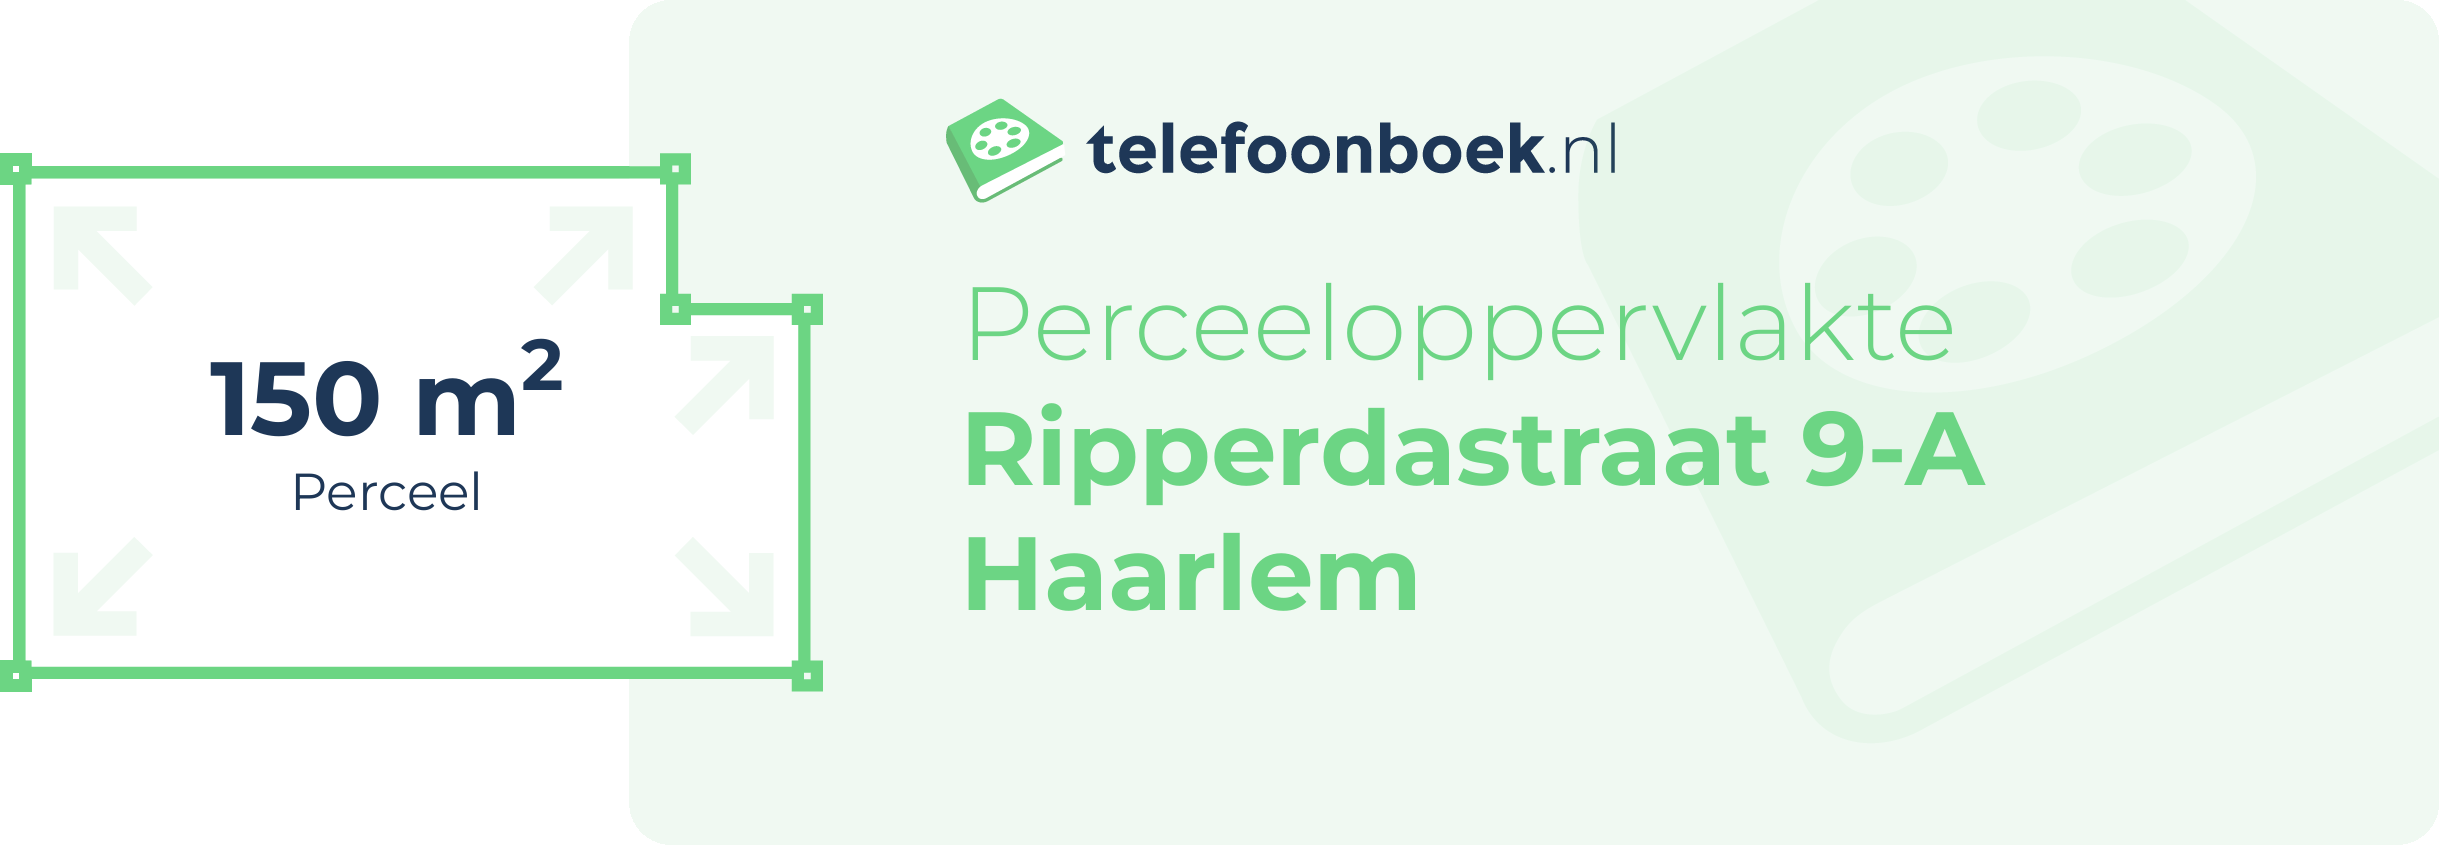 Perceeloppervlakte Ripperdastraat 9-A Haarlem